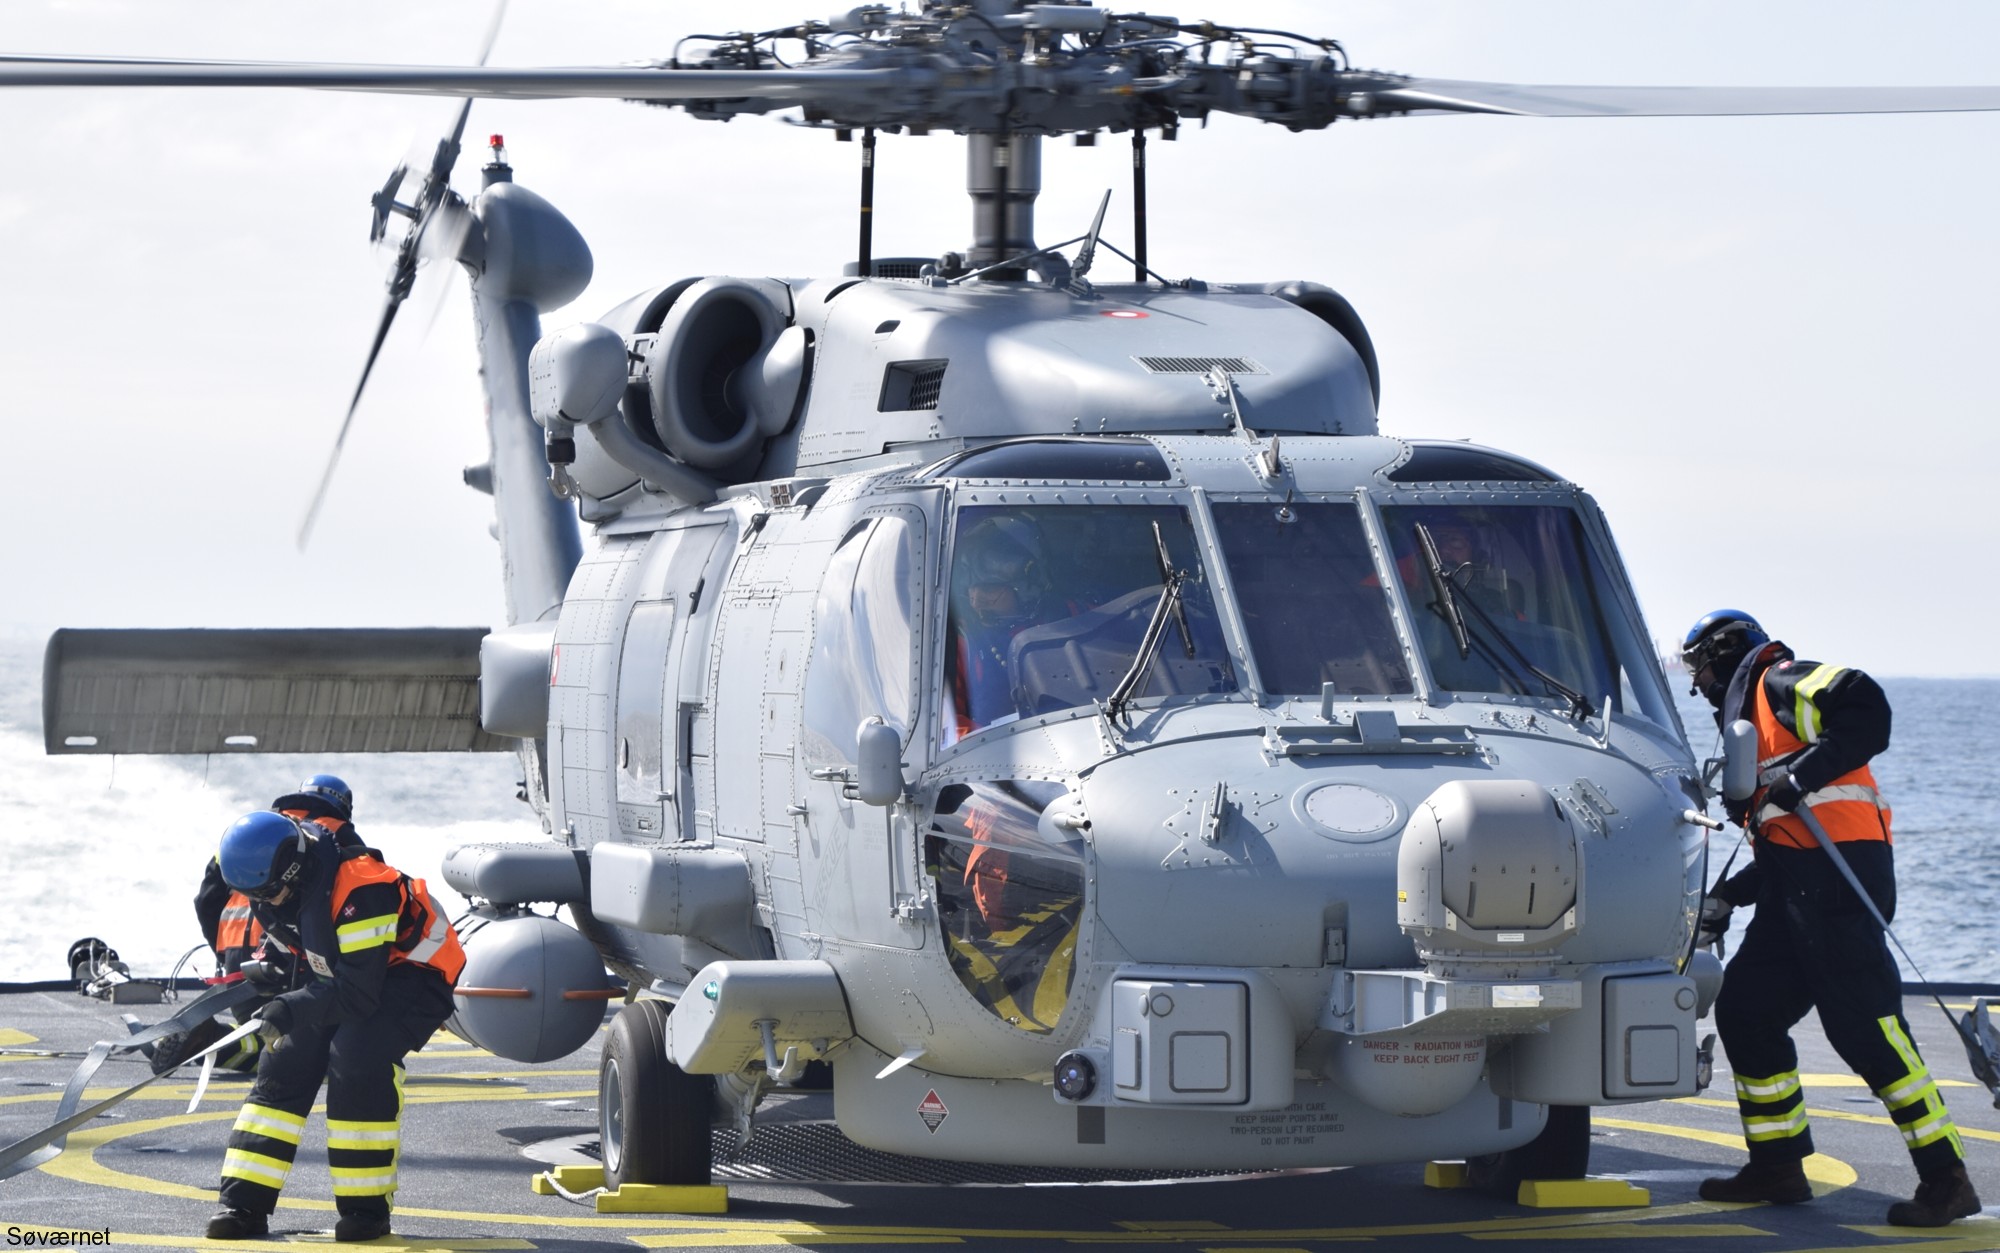 mh-60r seahawk royal danish navy air force flyvevåbnet kongelige danske marine sikorsky helicopter 723 eskadrille squadron frigate 06